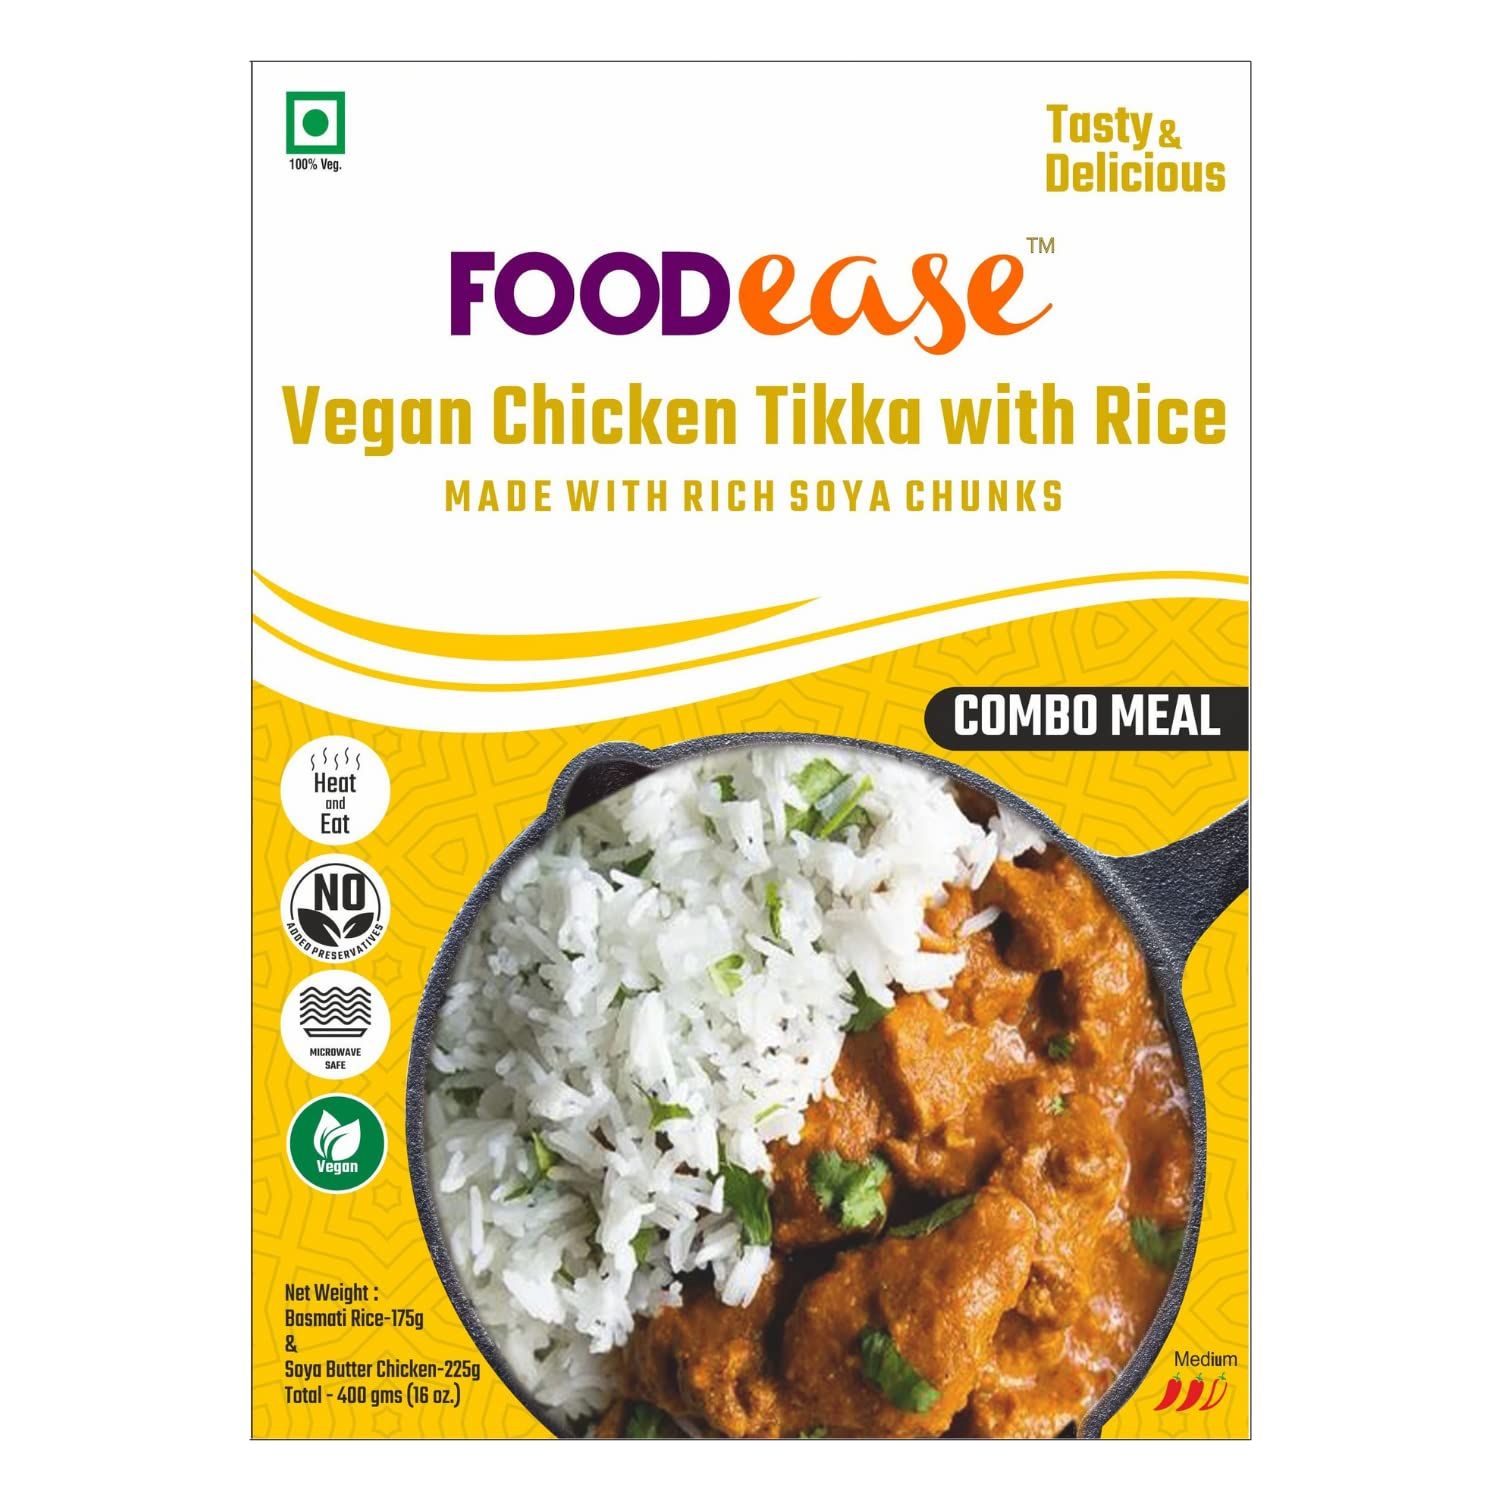 FOODease Vegan Chicken Tikka with Rice Image